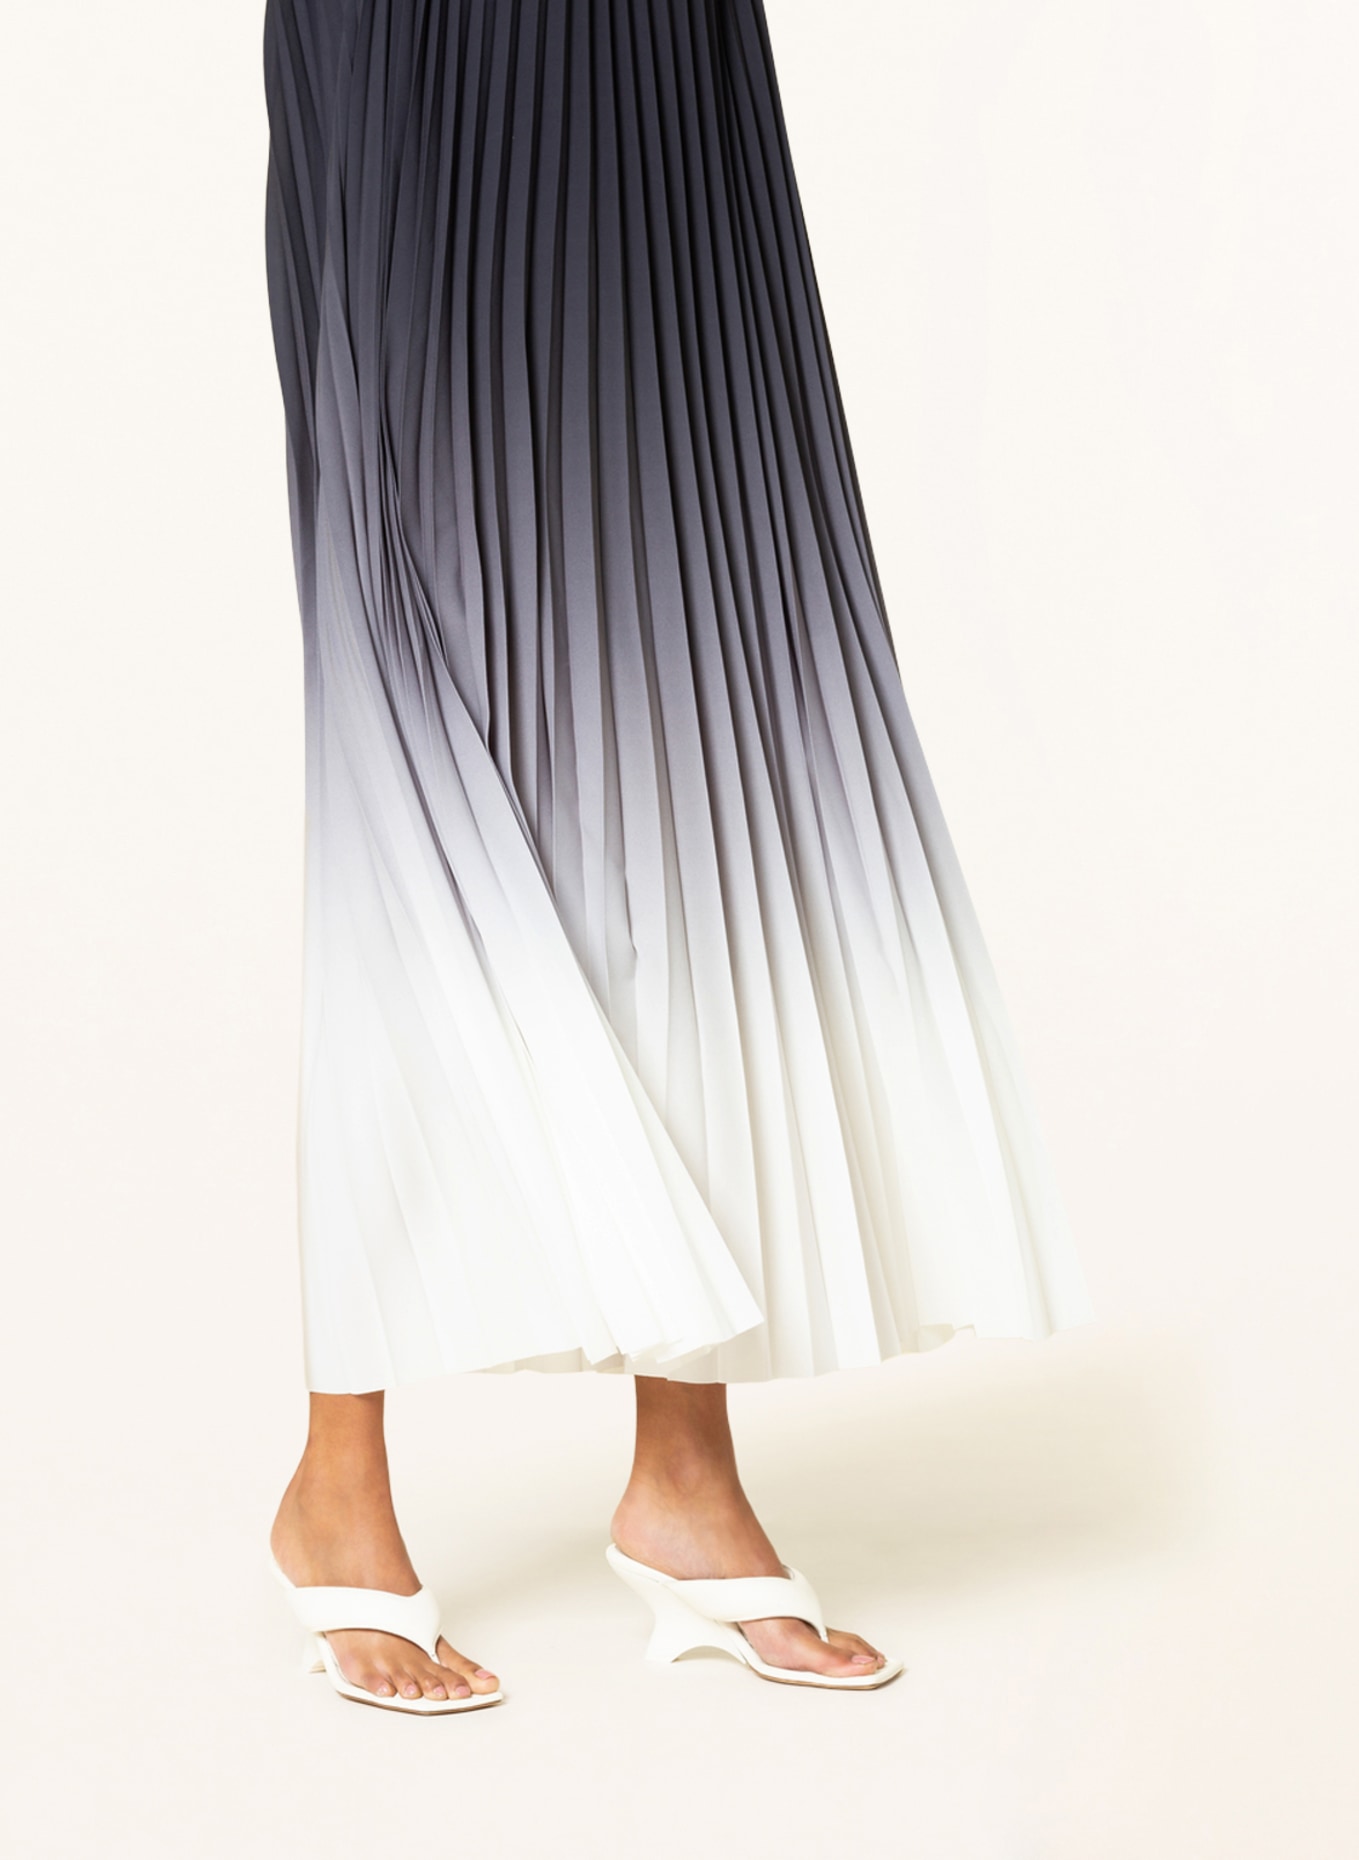 IVY OAK Pleated dress DIVINE, Color: DARK GRAY/ GRAY/ LIGHT GRAY (Image 4)